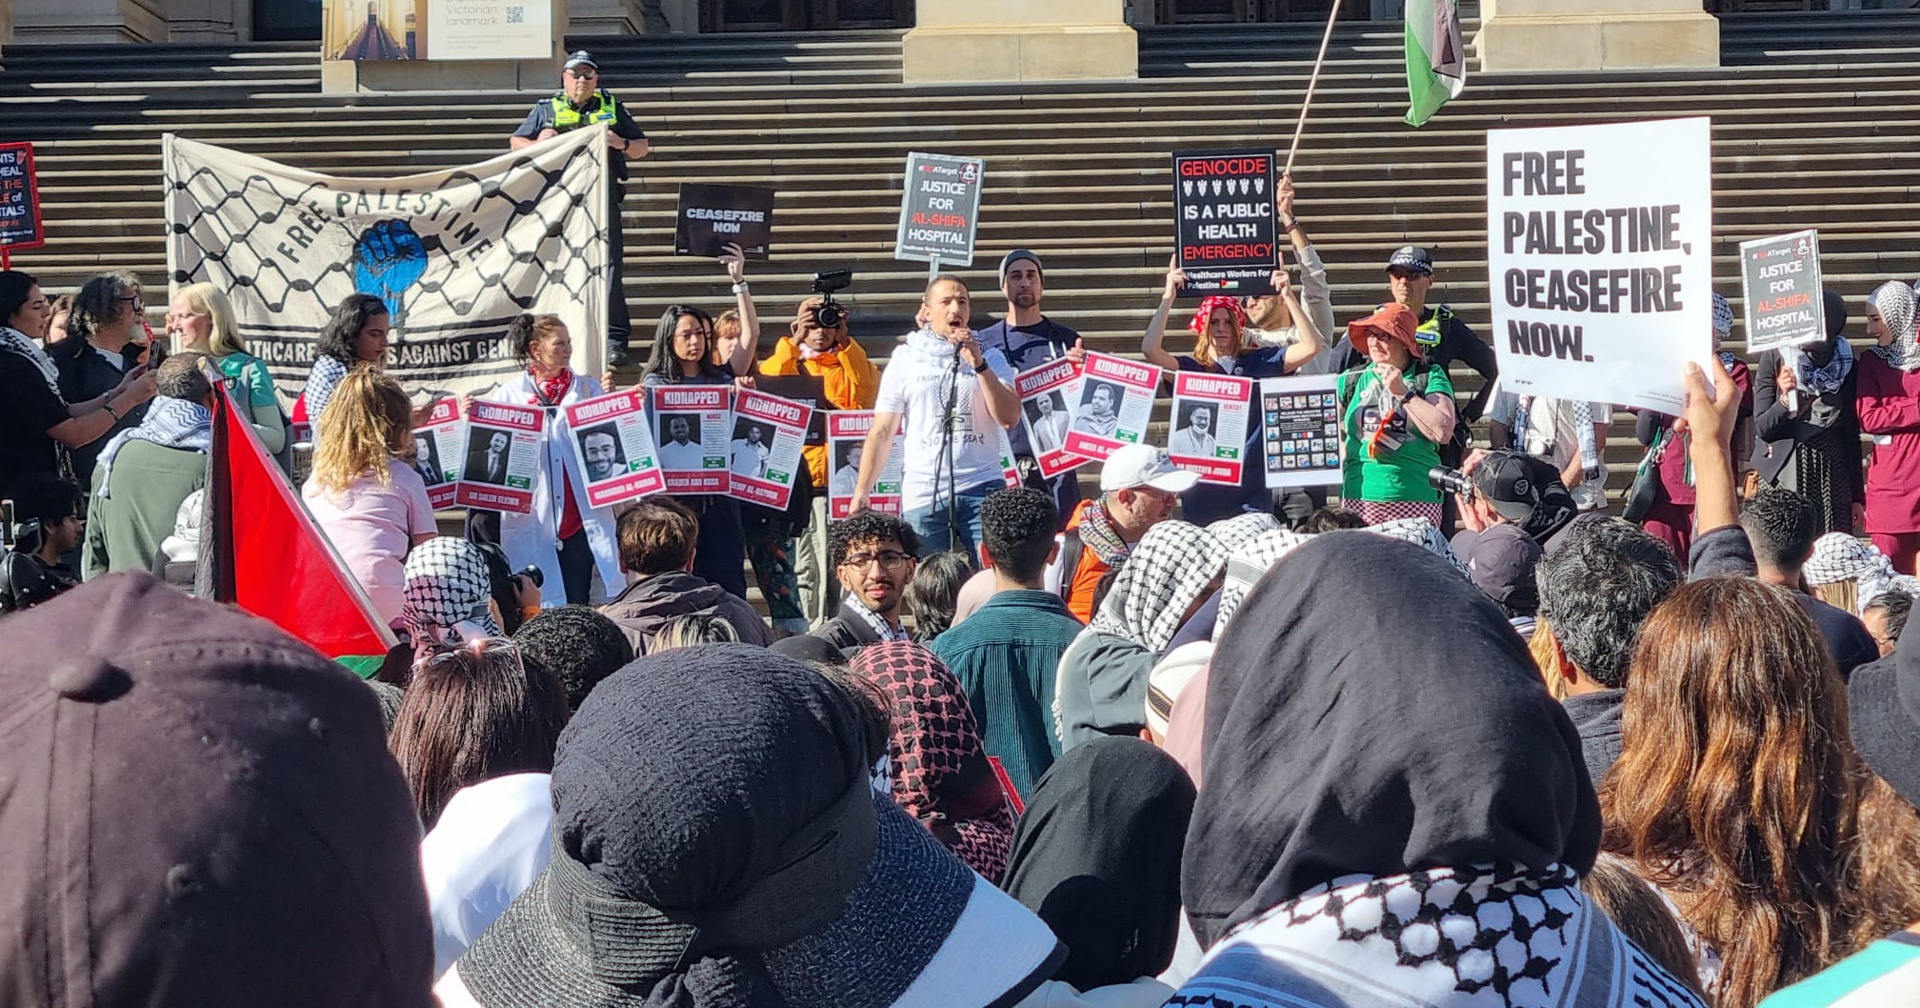 Free Palestine, Naarm/Melbourne, April 21